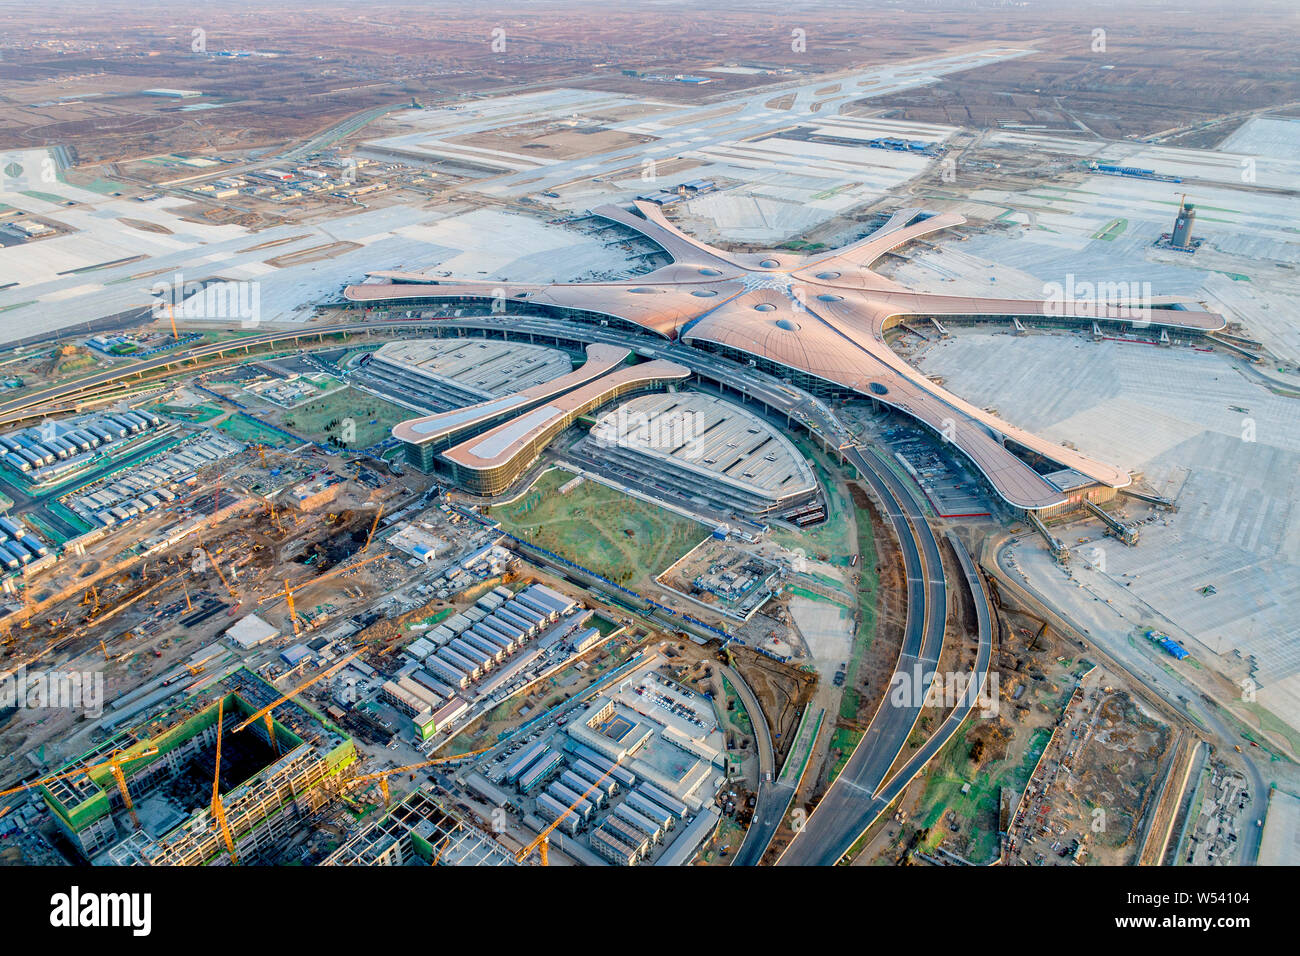 Самый большой сток. Аэропорт Пекин Дасин. Пекин Дасин, Международный аэропорт, Китай. Самый большой аэропорт Китая Дасин. Аэропорт Пекин Дасин стройка.